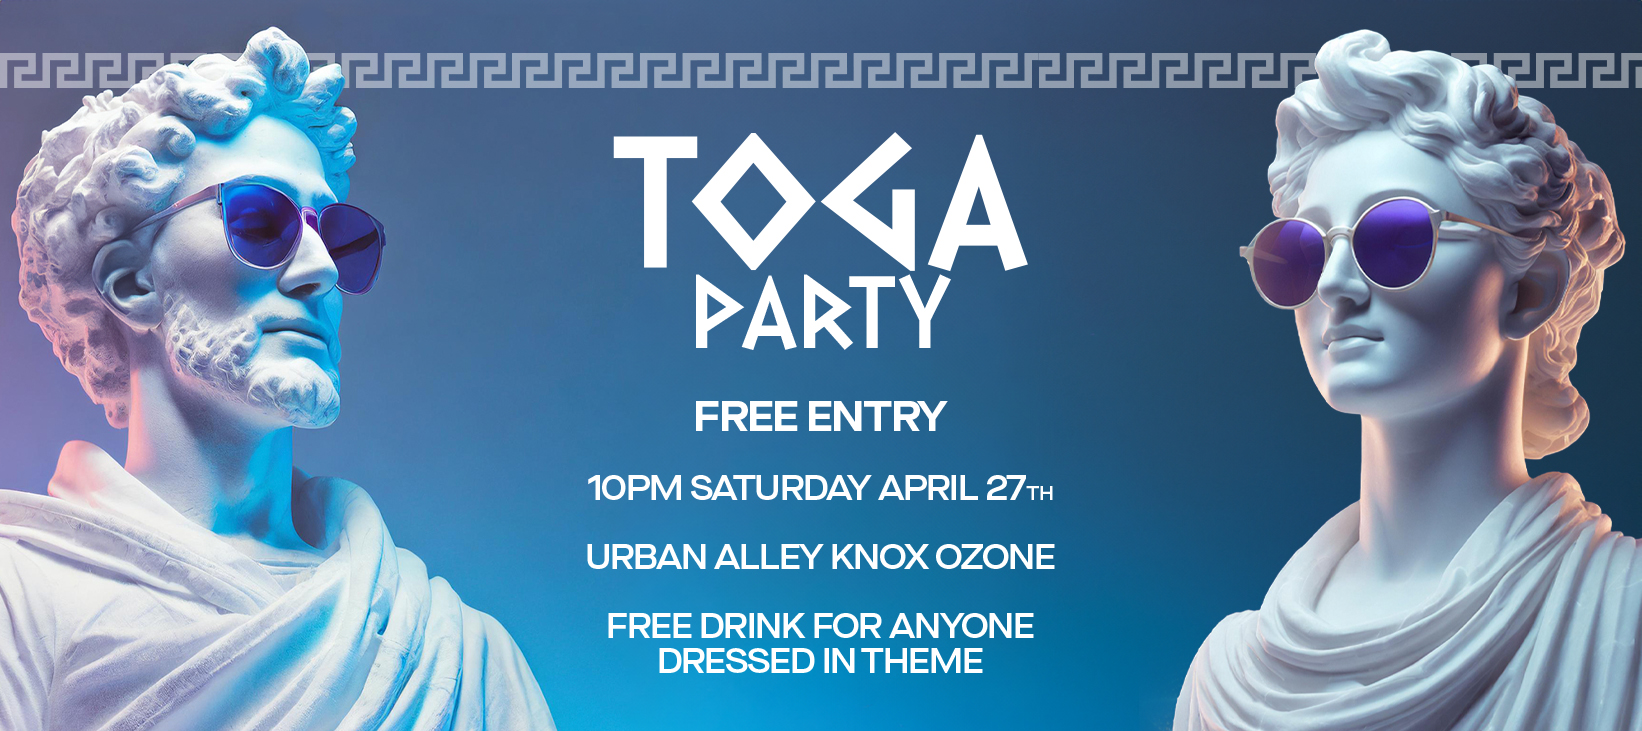 Toga Party - Website Banner